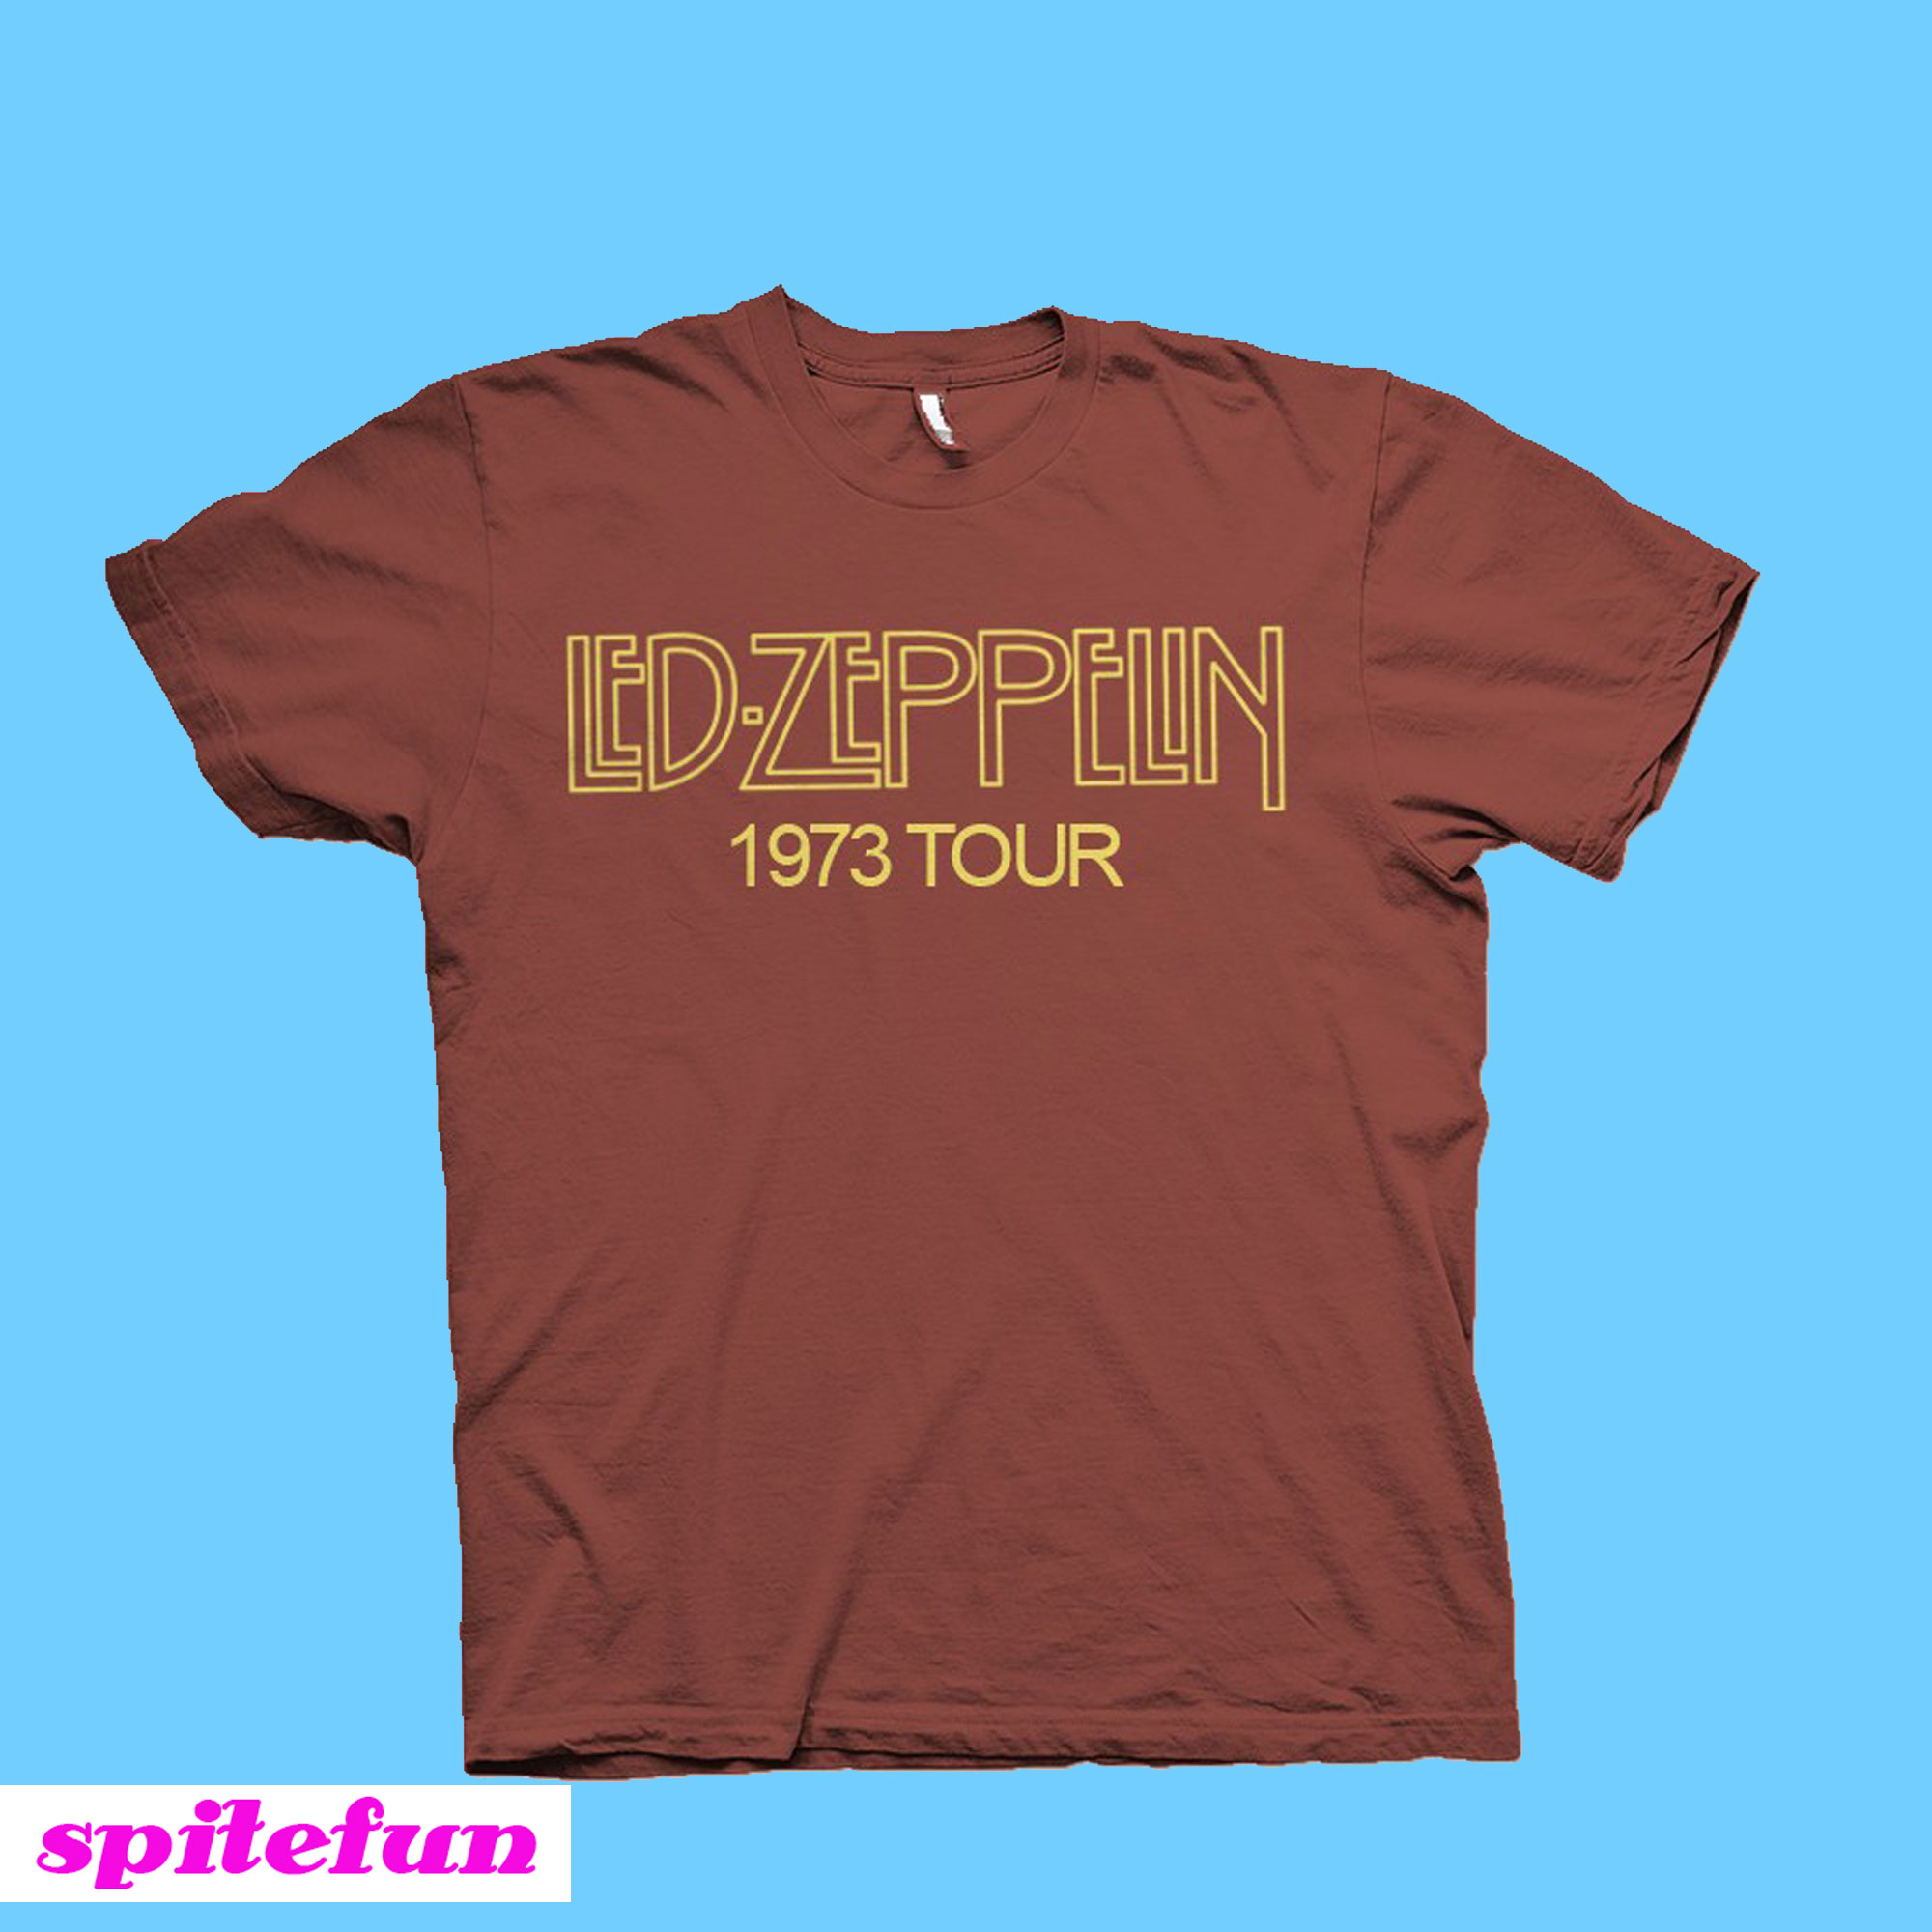 led zeppelin 1973 tour shirt